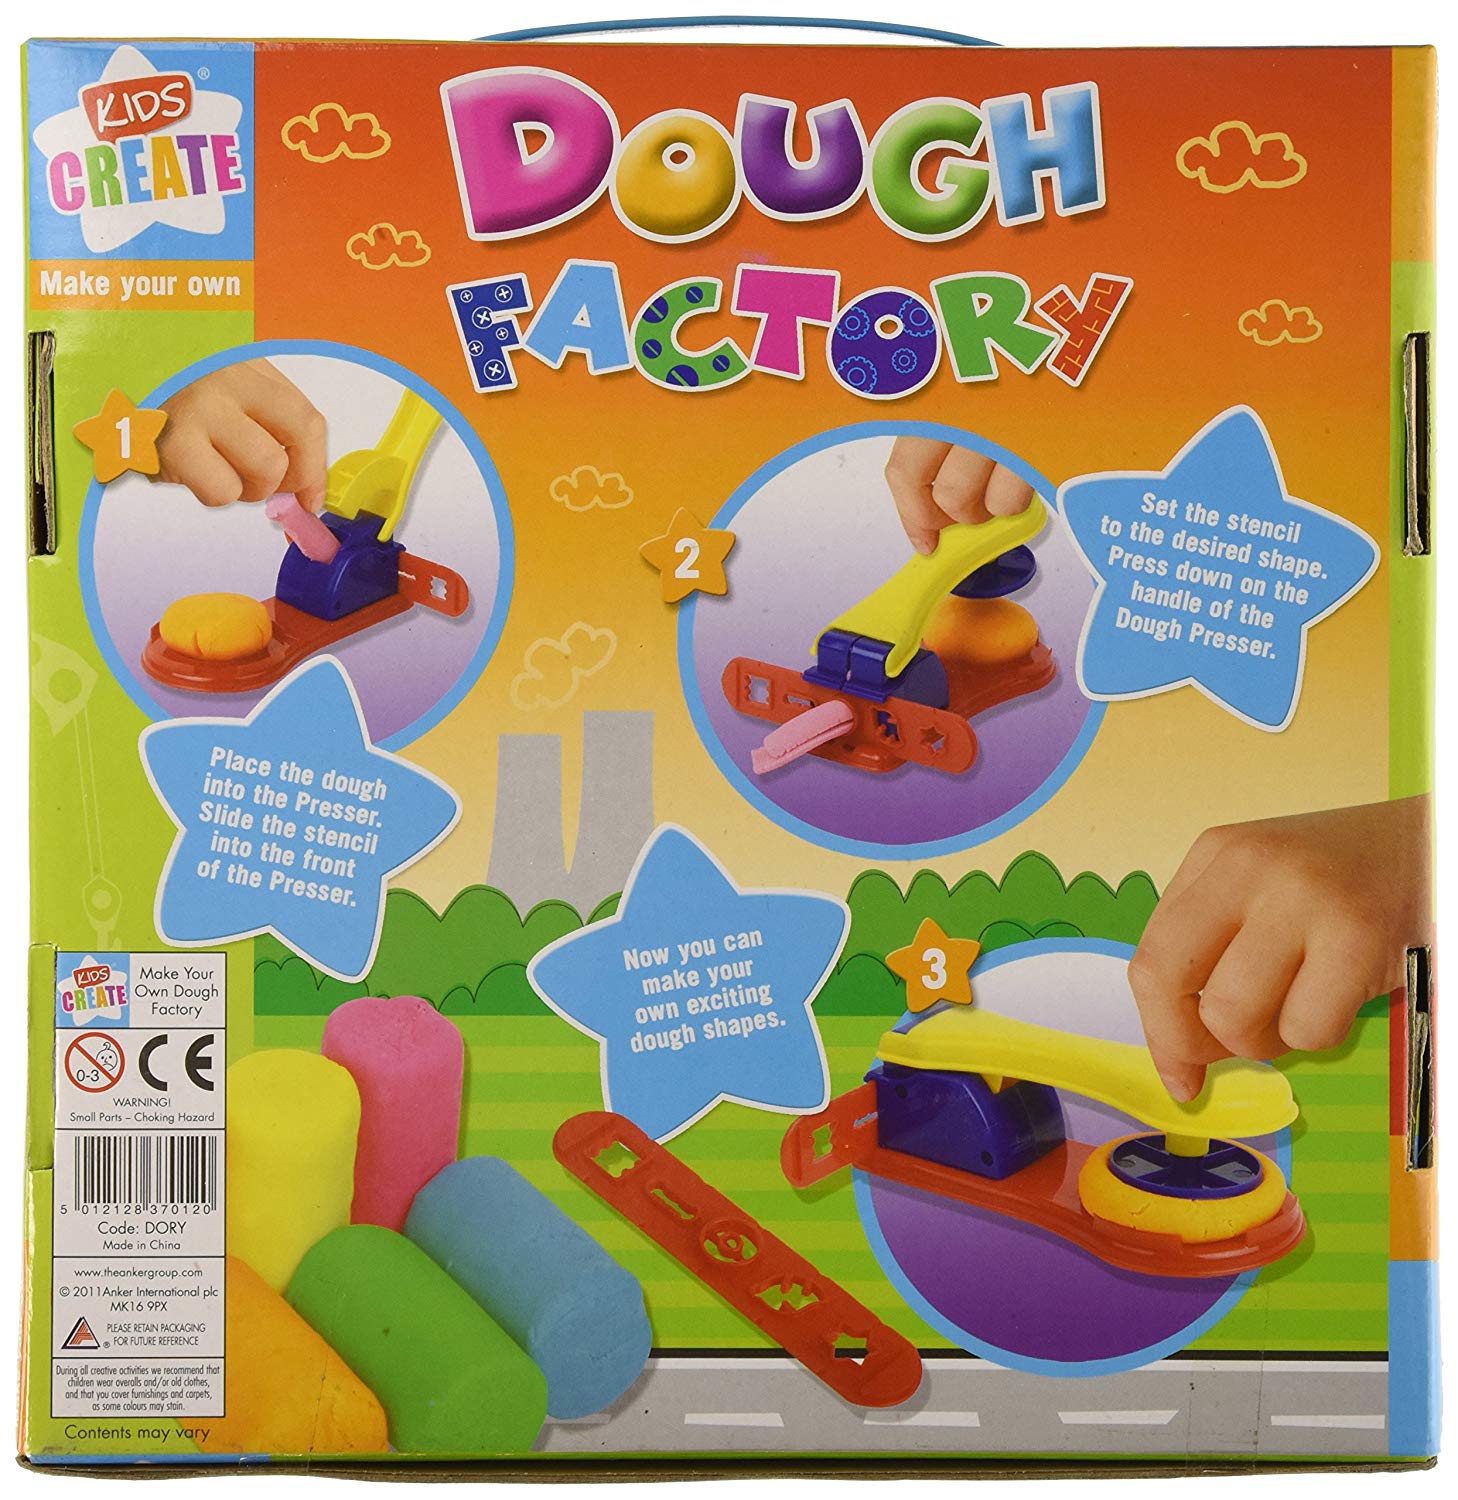 Kids Create Make Your Own 'Dough Factory' Dough Creativity